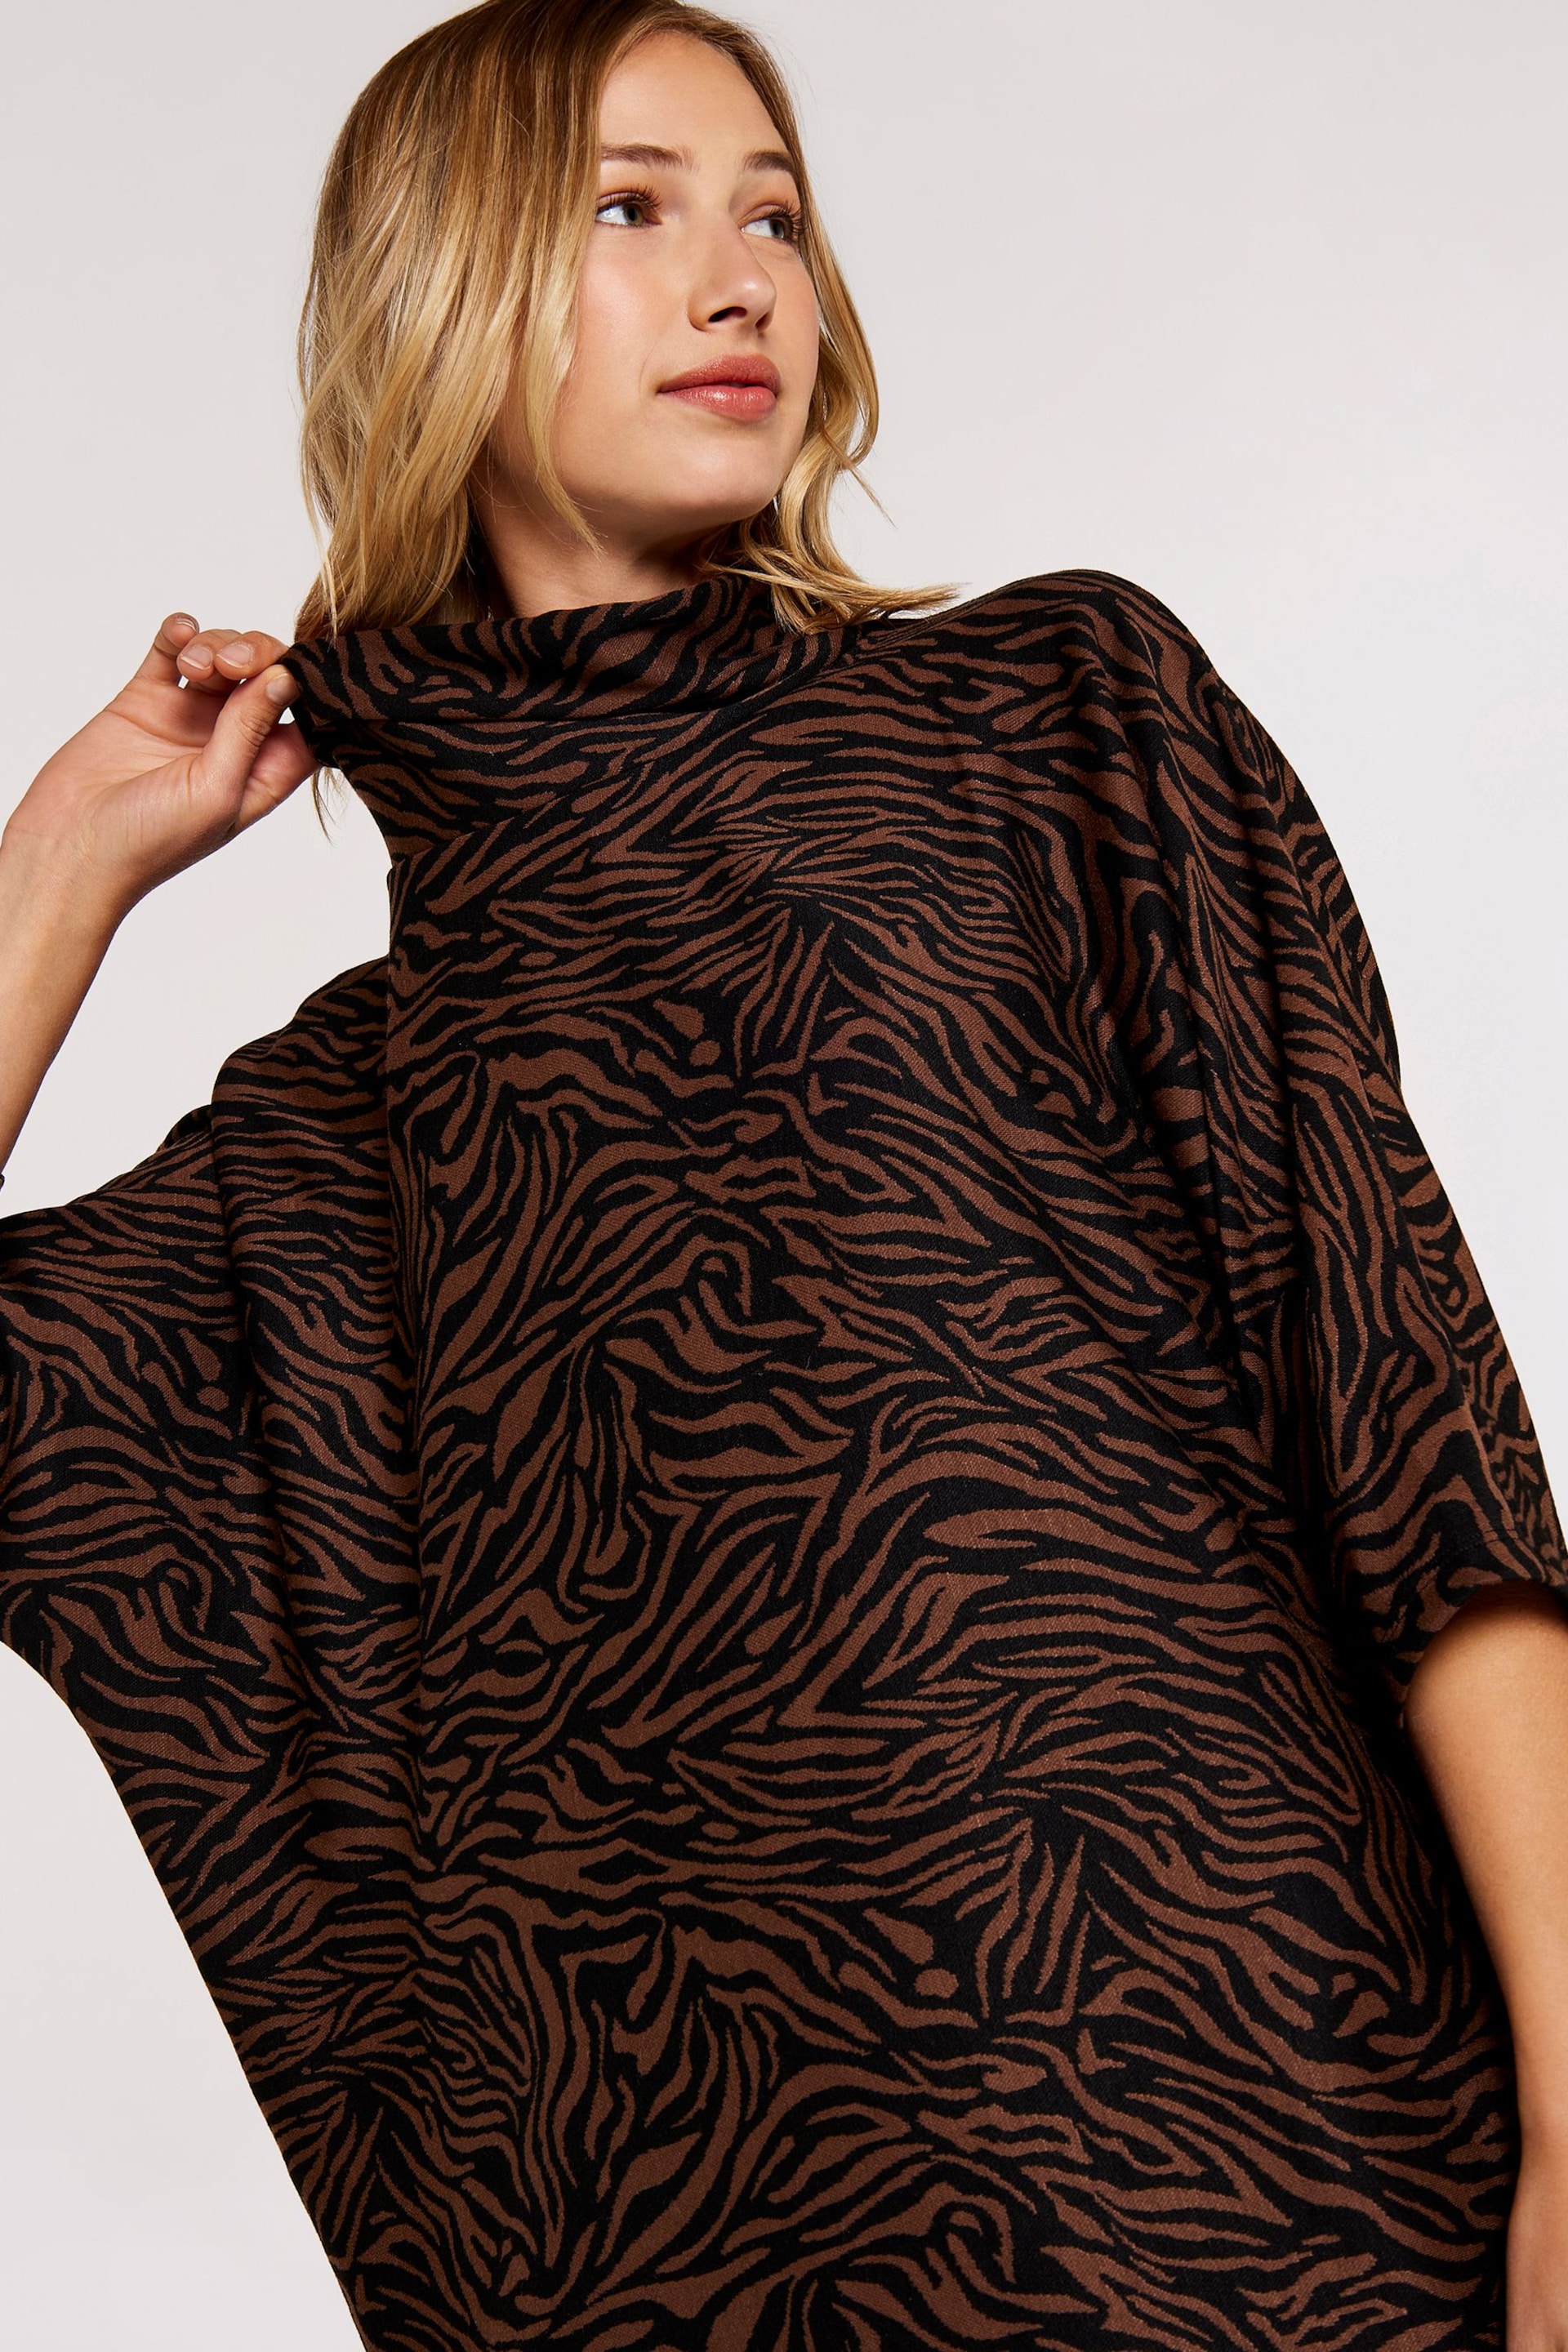 Apricot Brown & Black Zebra Print Cocoon Dress - Image 4 of 4